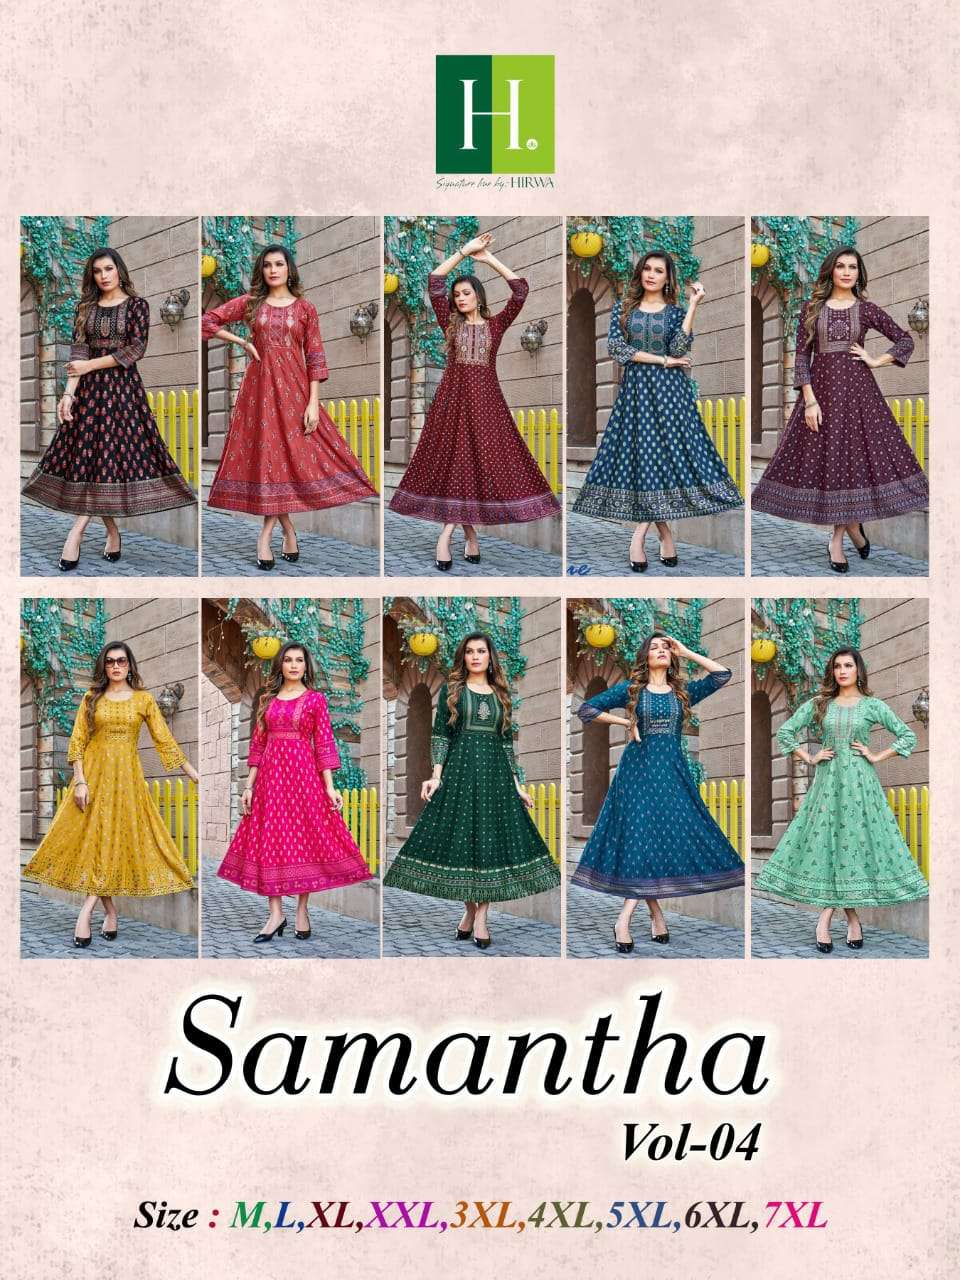 hirwa samantha vol 4 latest anarkali designer new pattern catalogue 